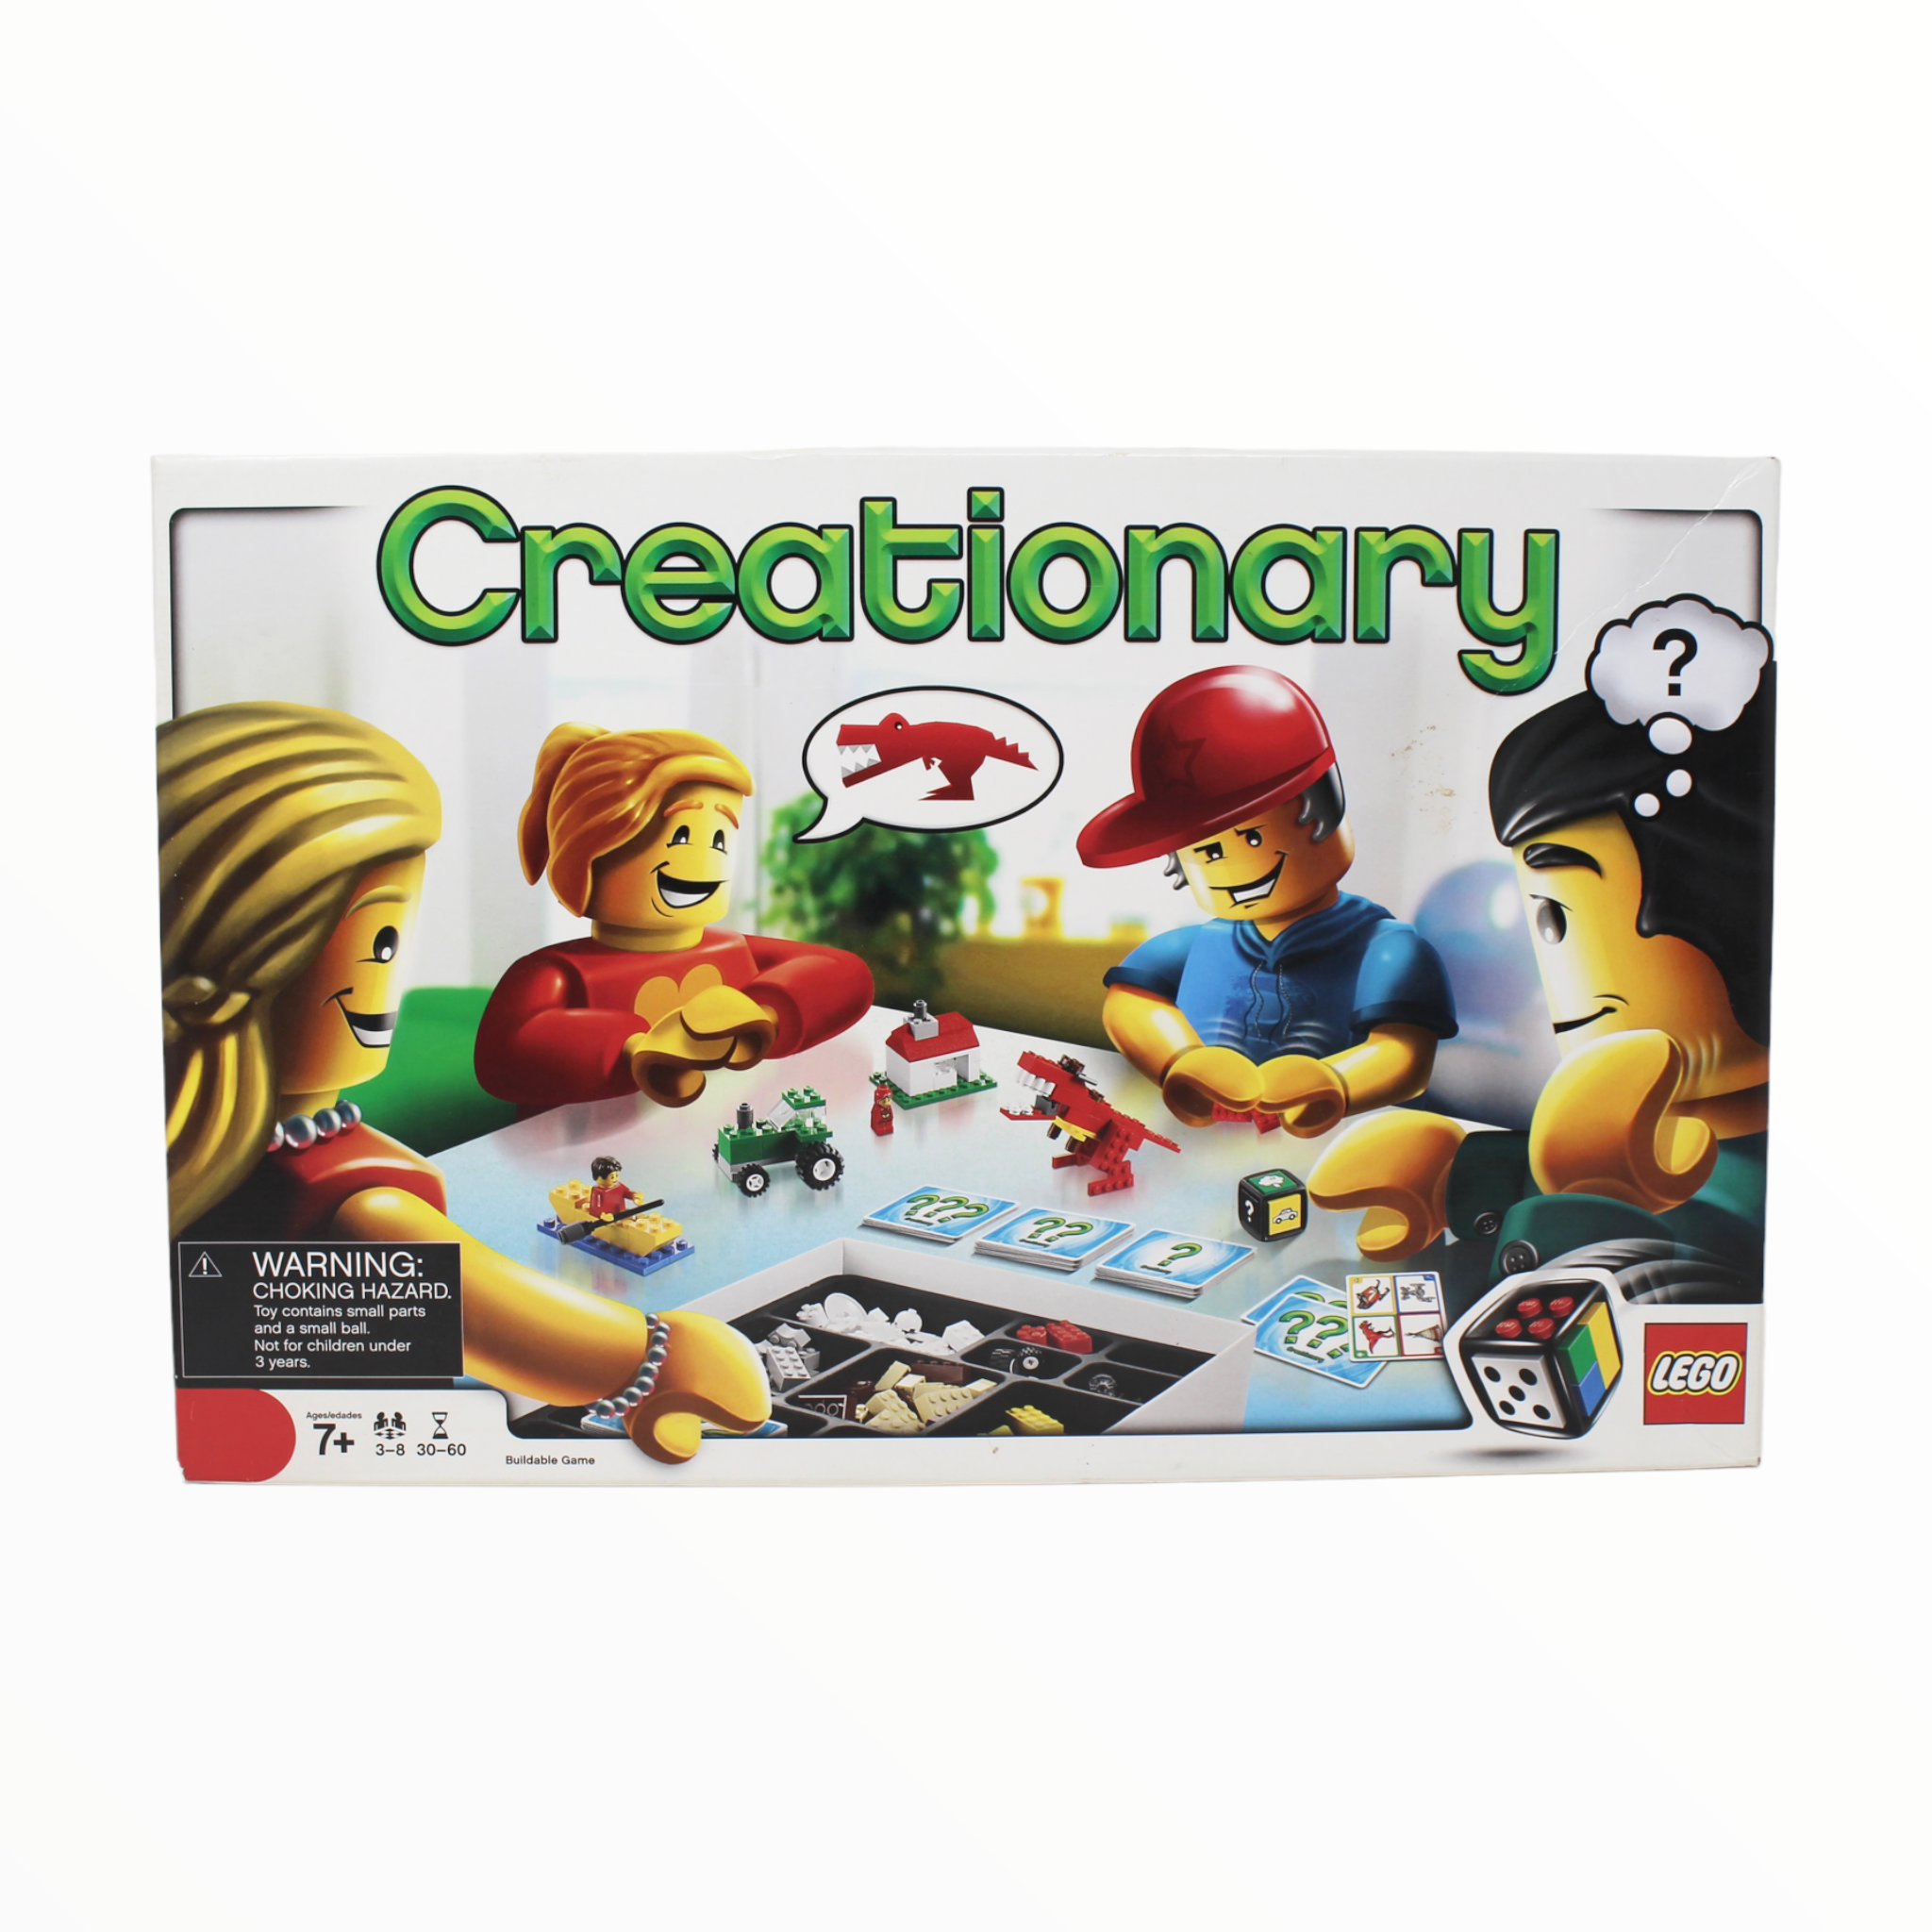 Certified Used Set 3844 LEGO Creationary